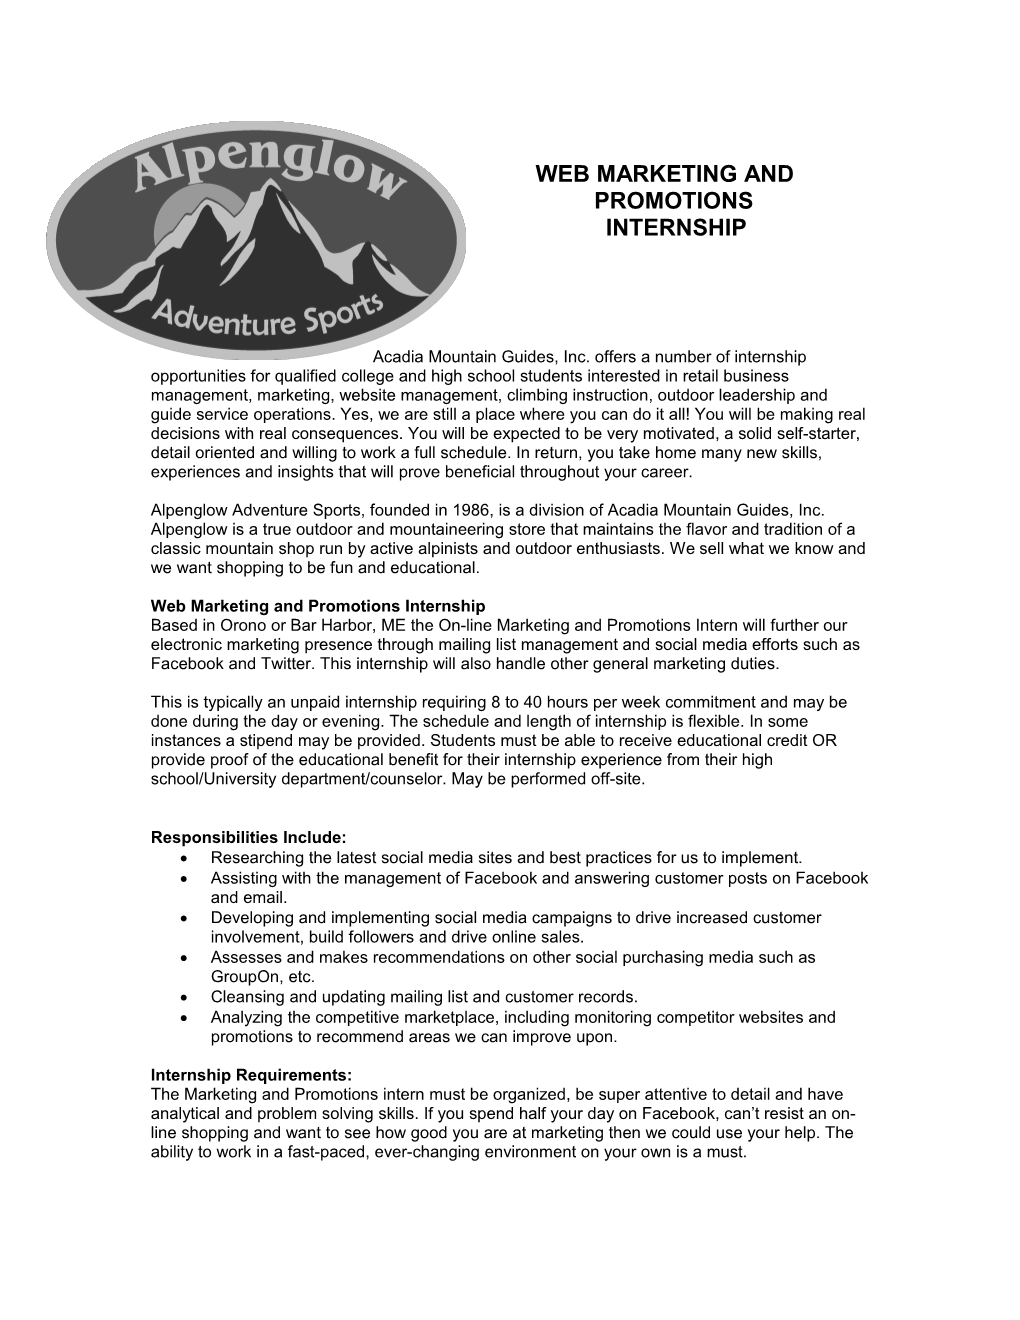 Web Marketing and Promotions Internship